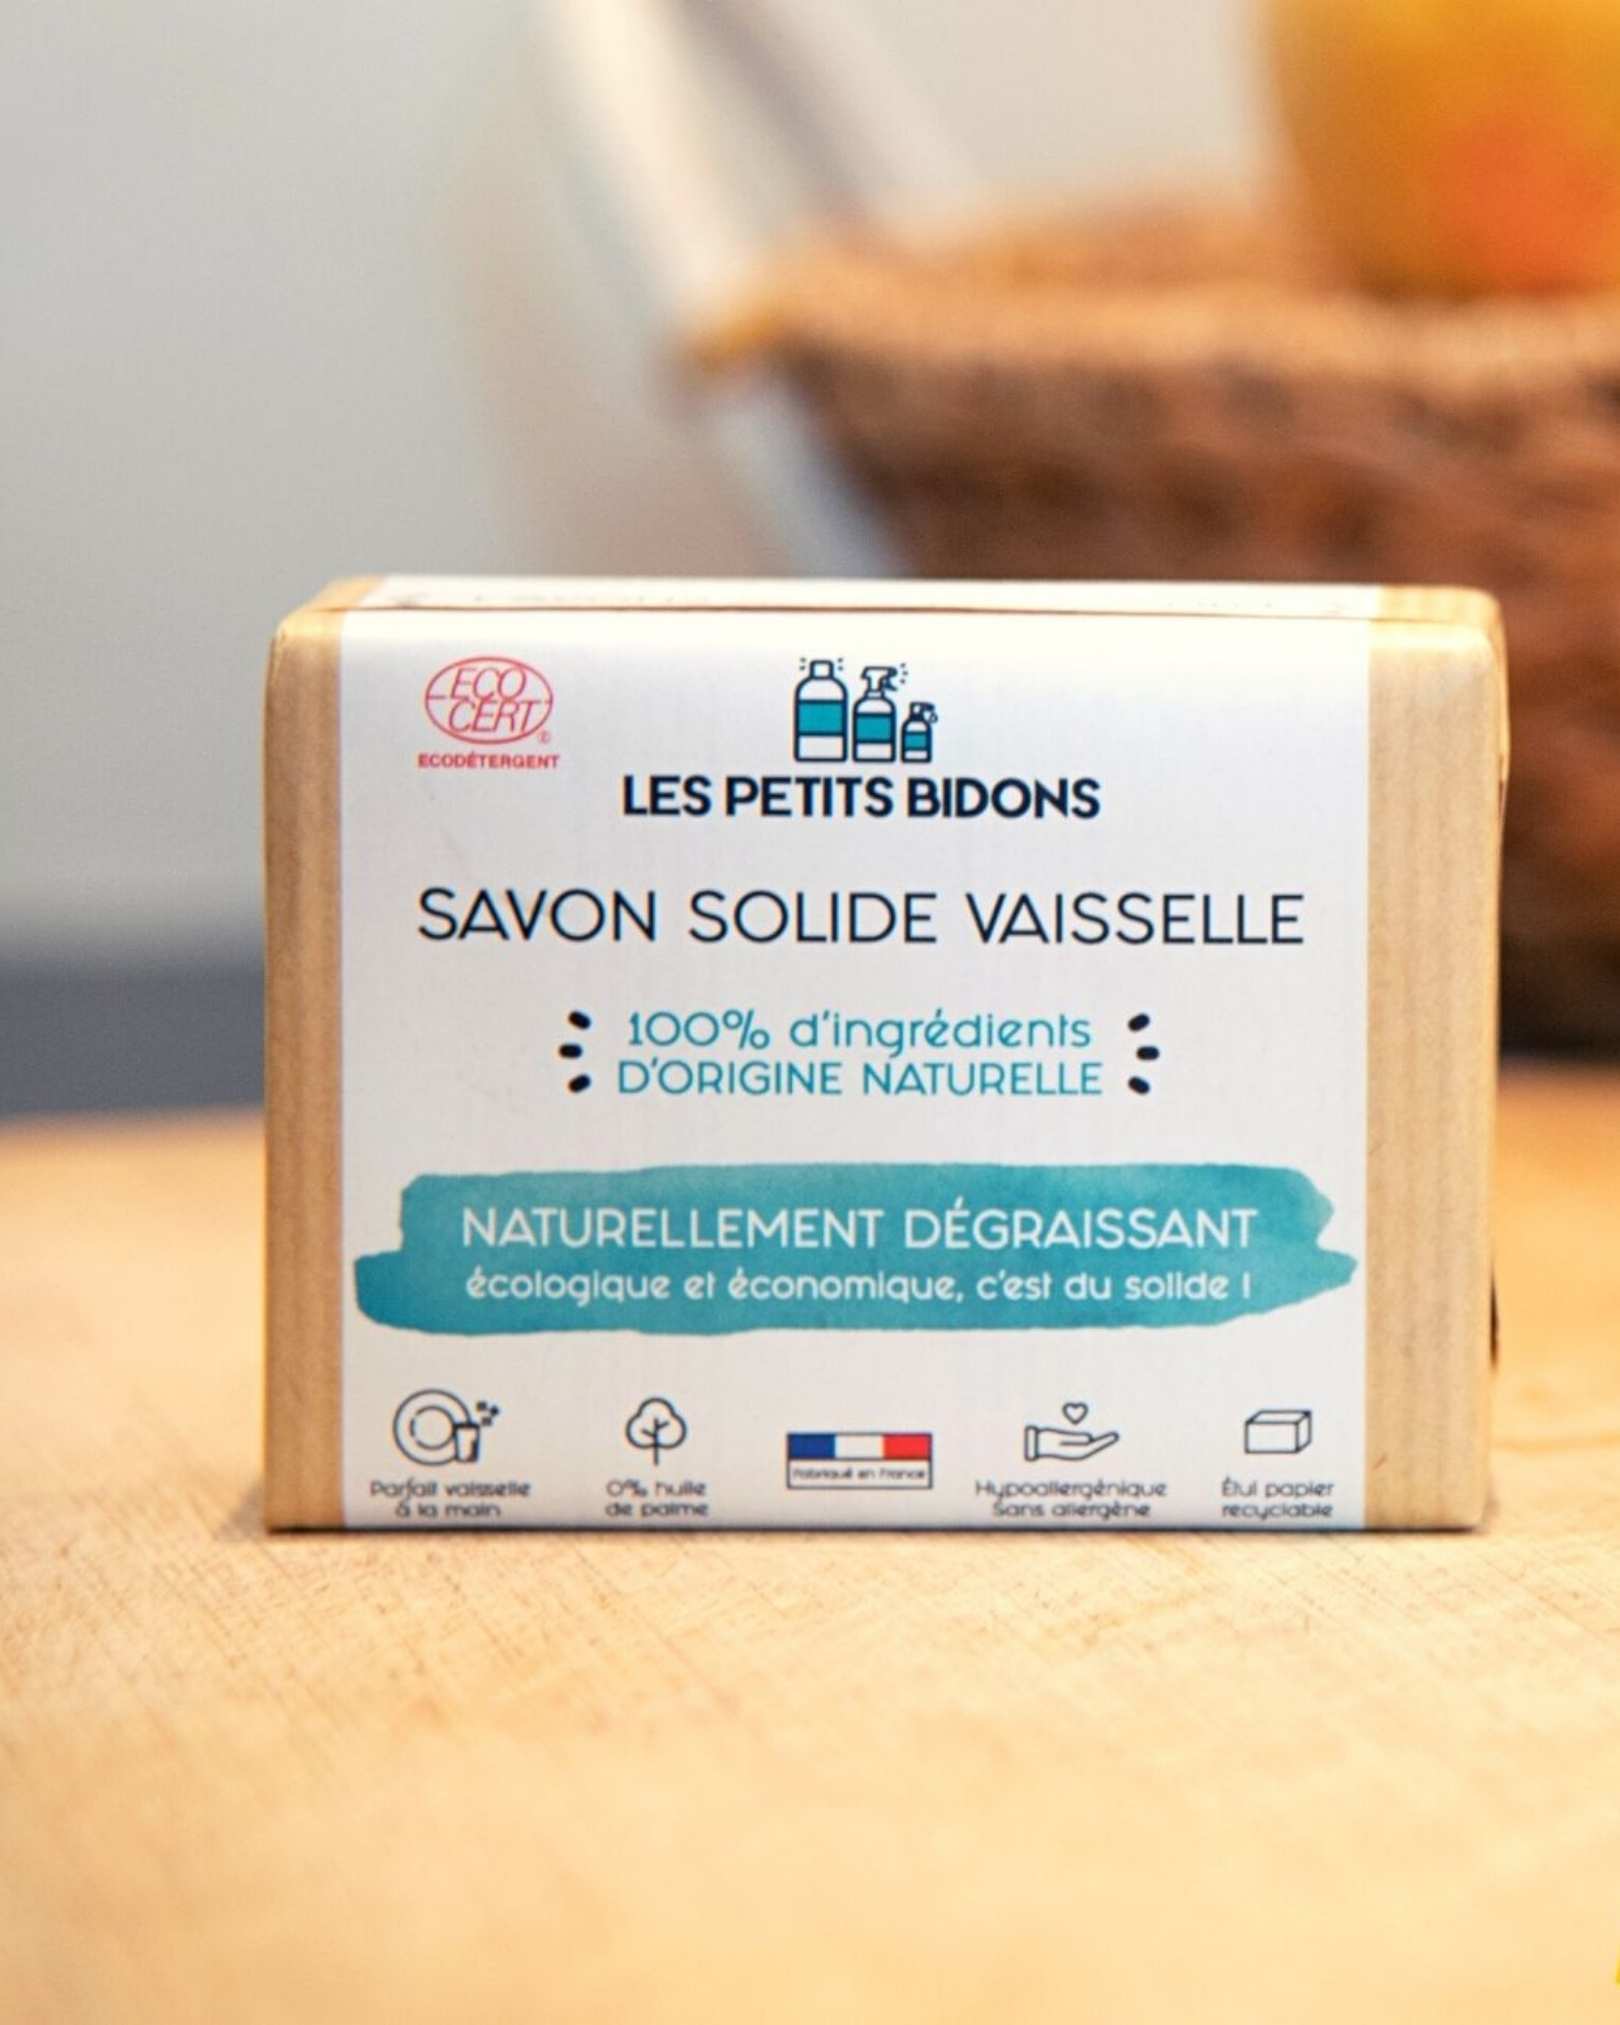 Savon solide vaisselle Les Petits Bidons - the Trust Society